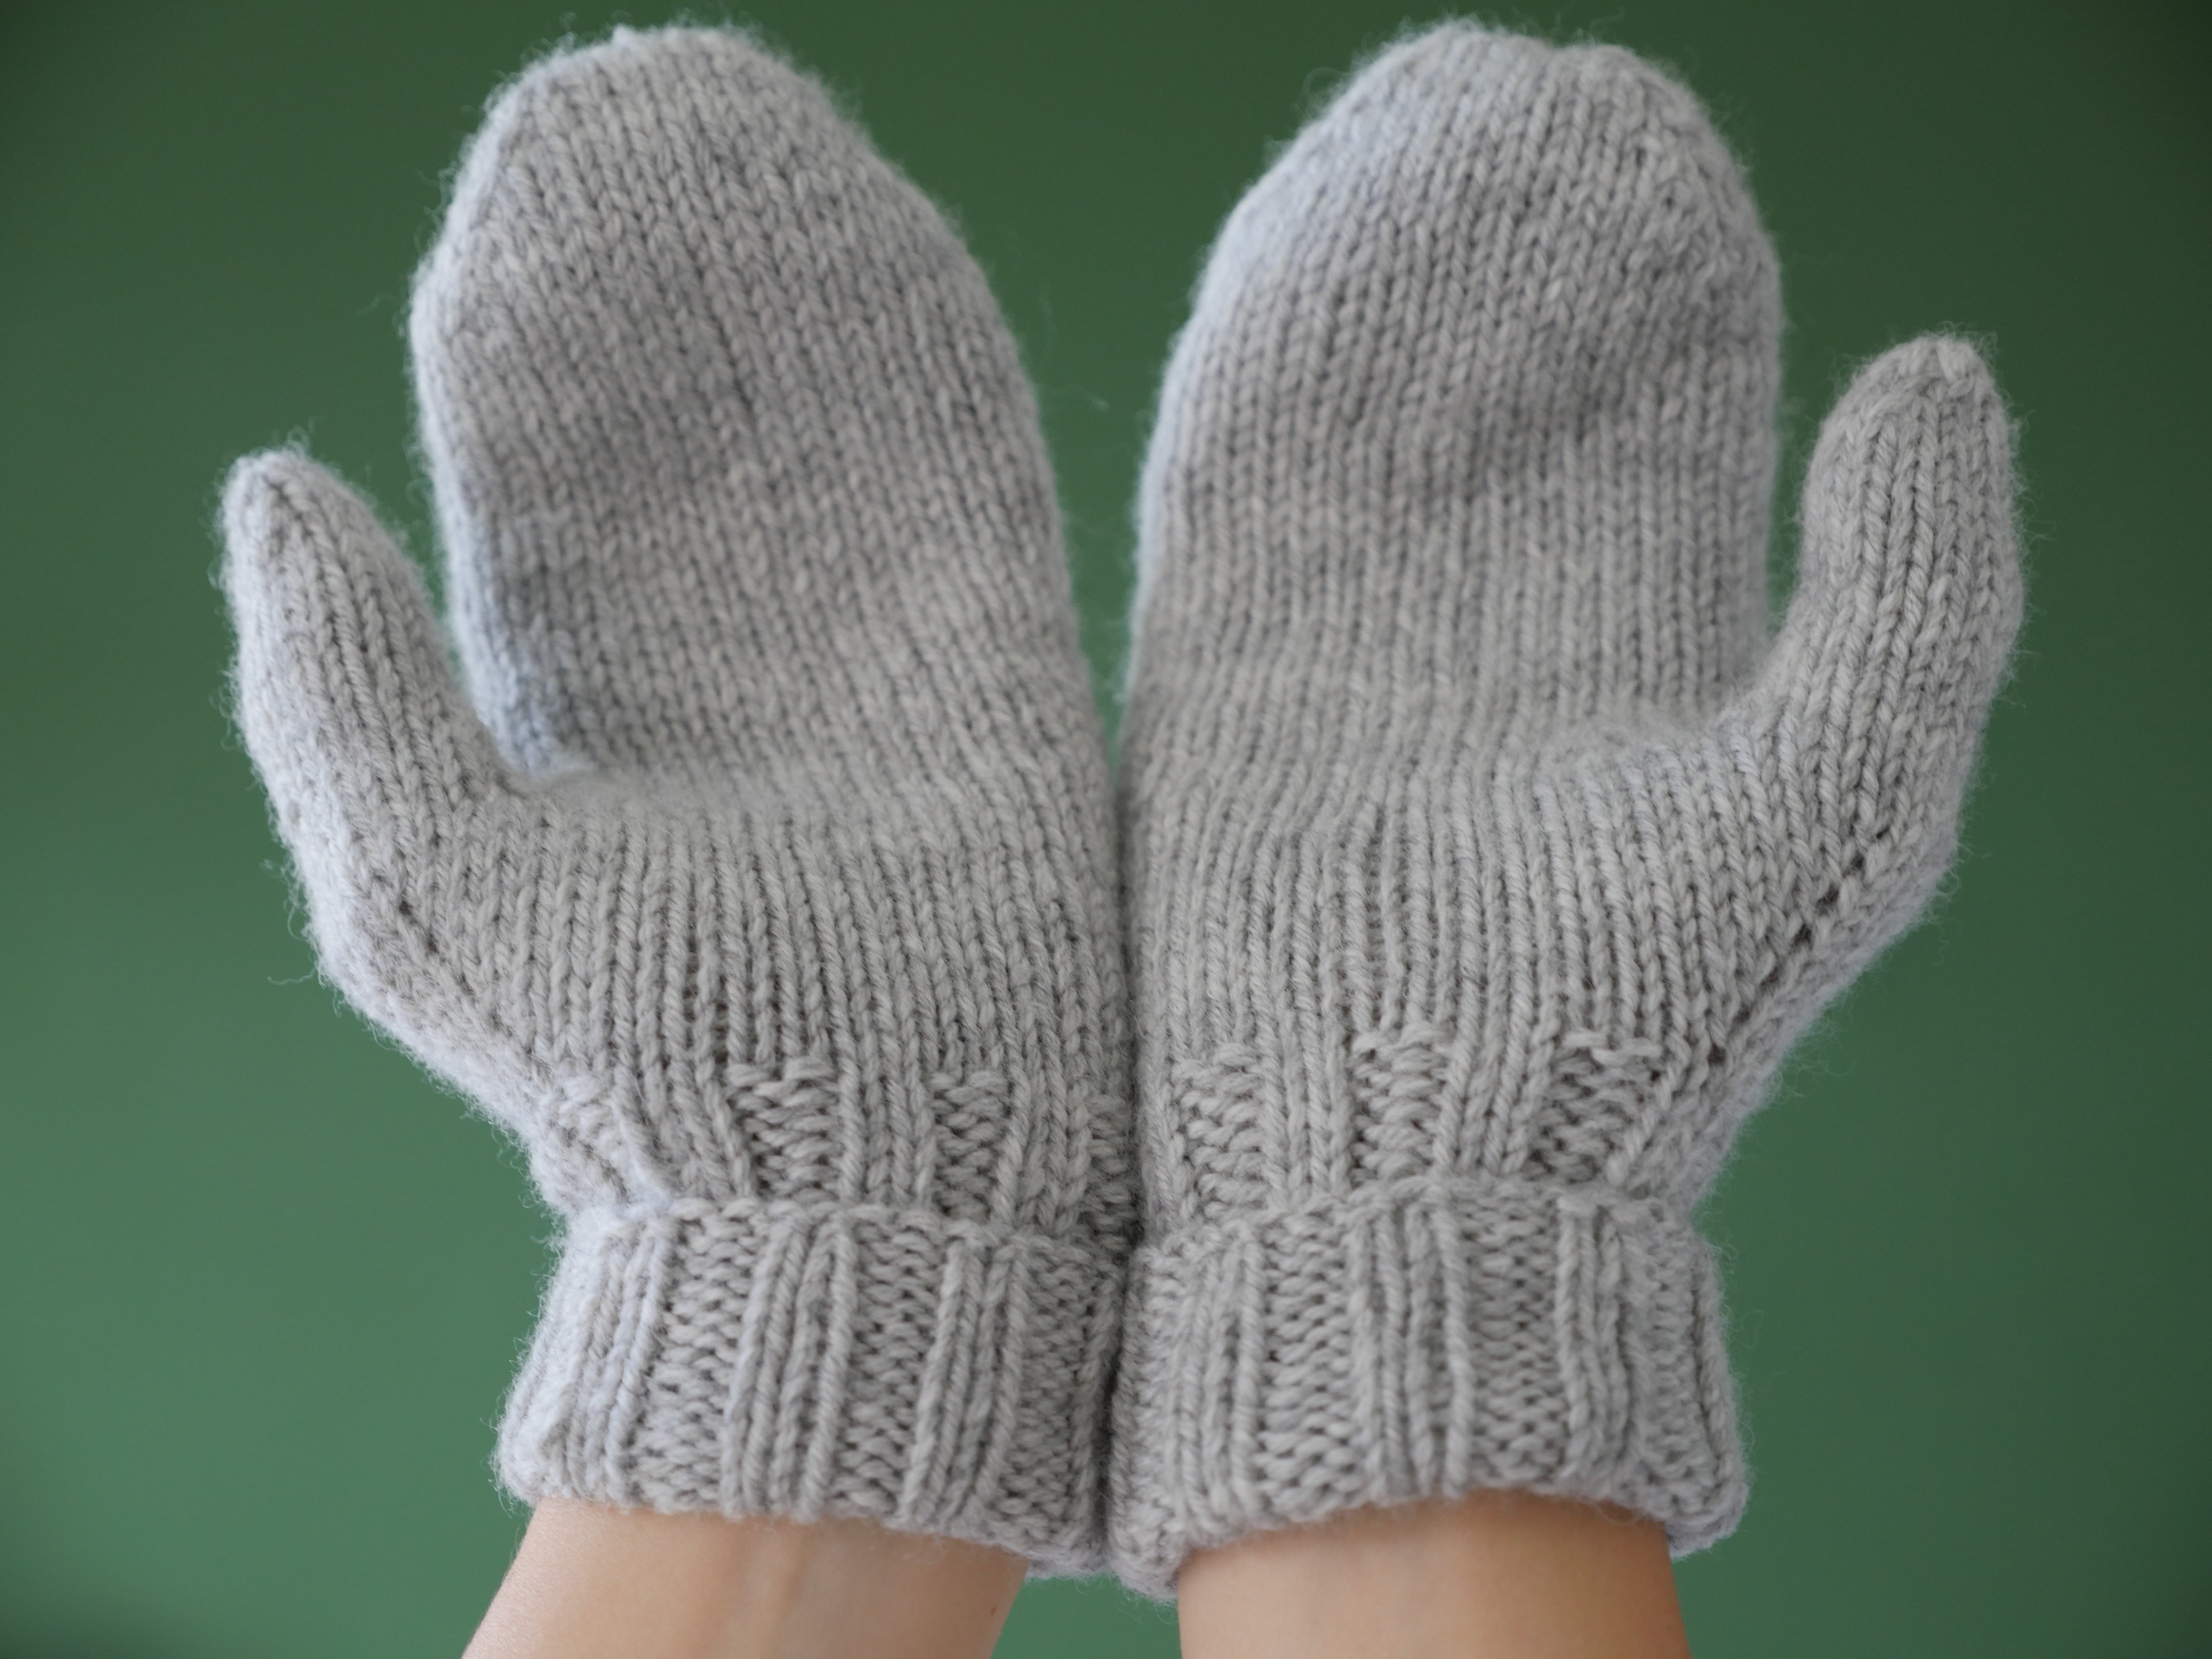 Stitchips Magnificent Mittens & Socks at WEBS